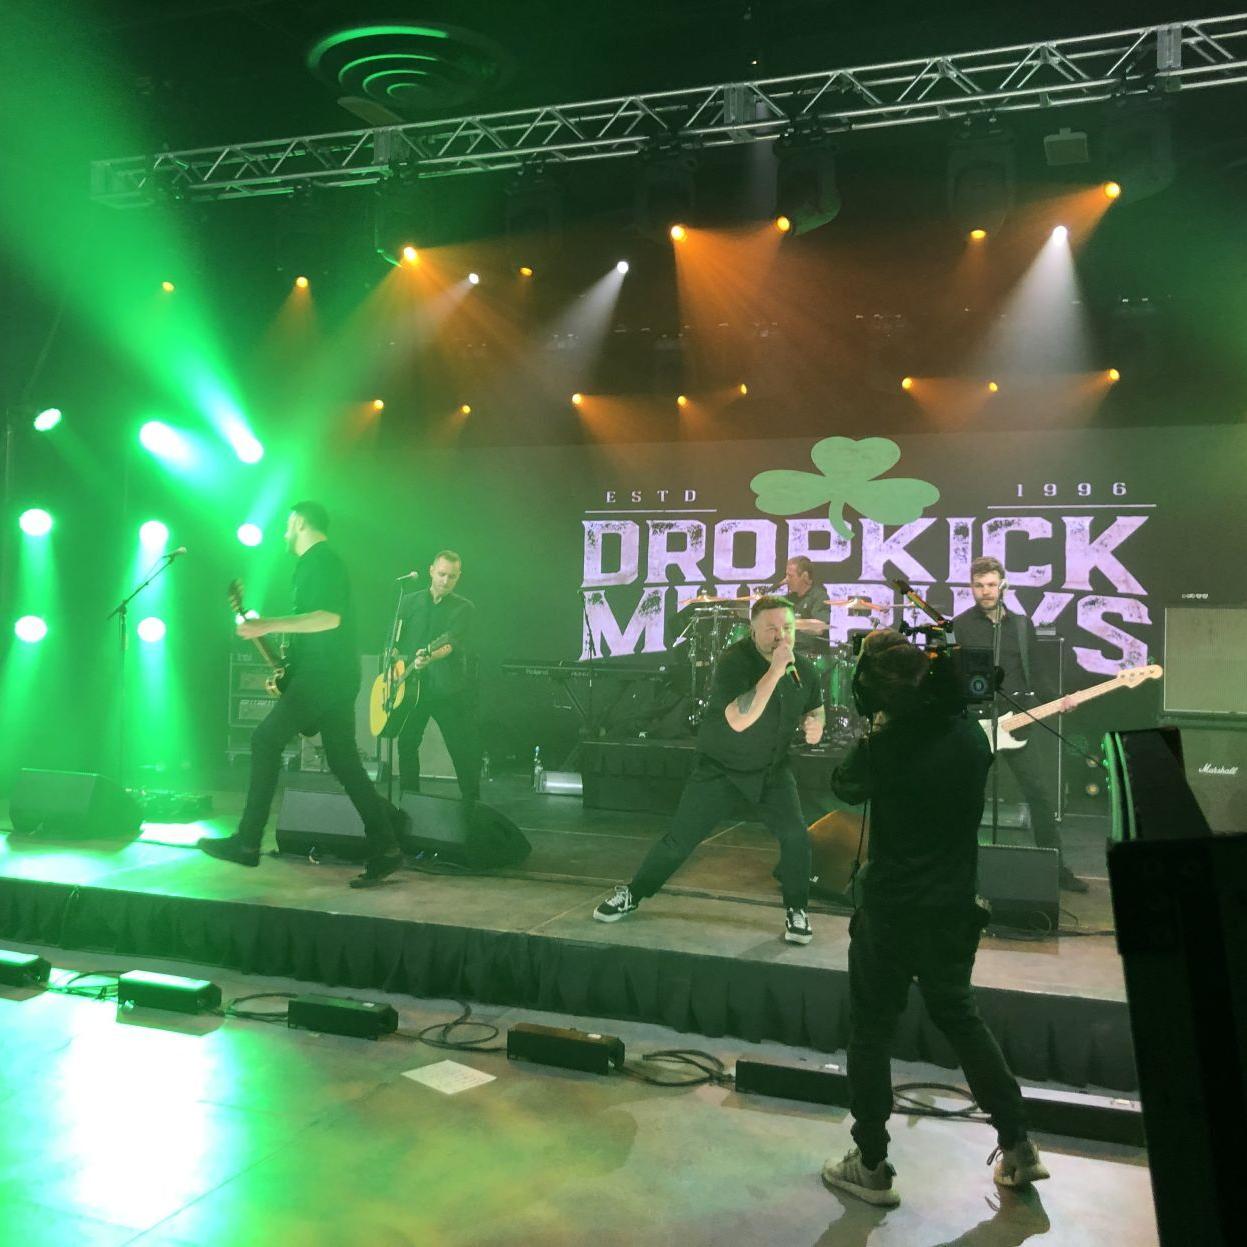 The Dropkick Murphys' bring a total St. Patrick's Day Celebration